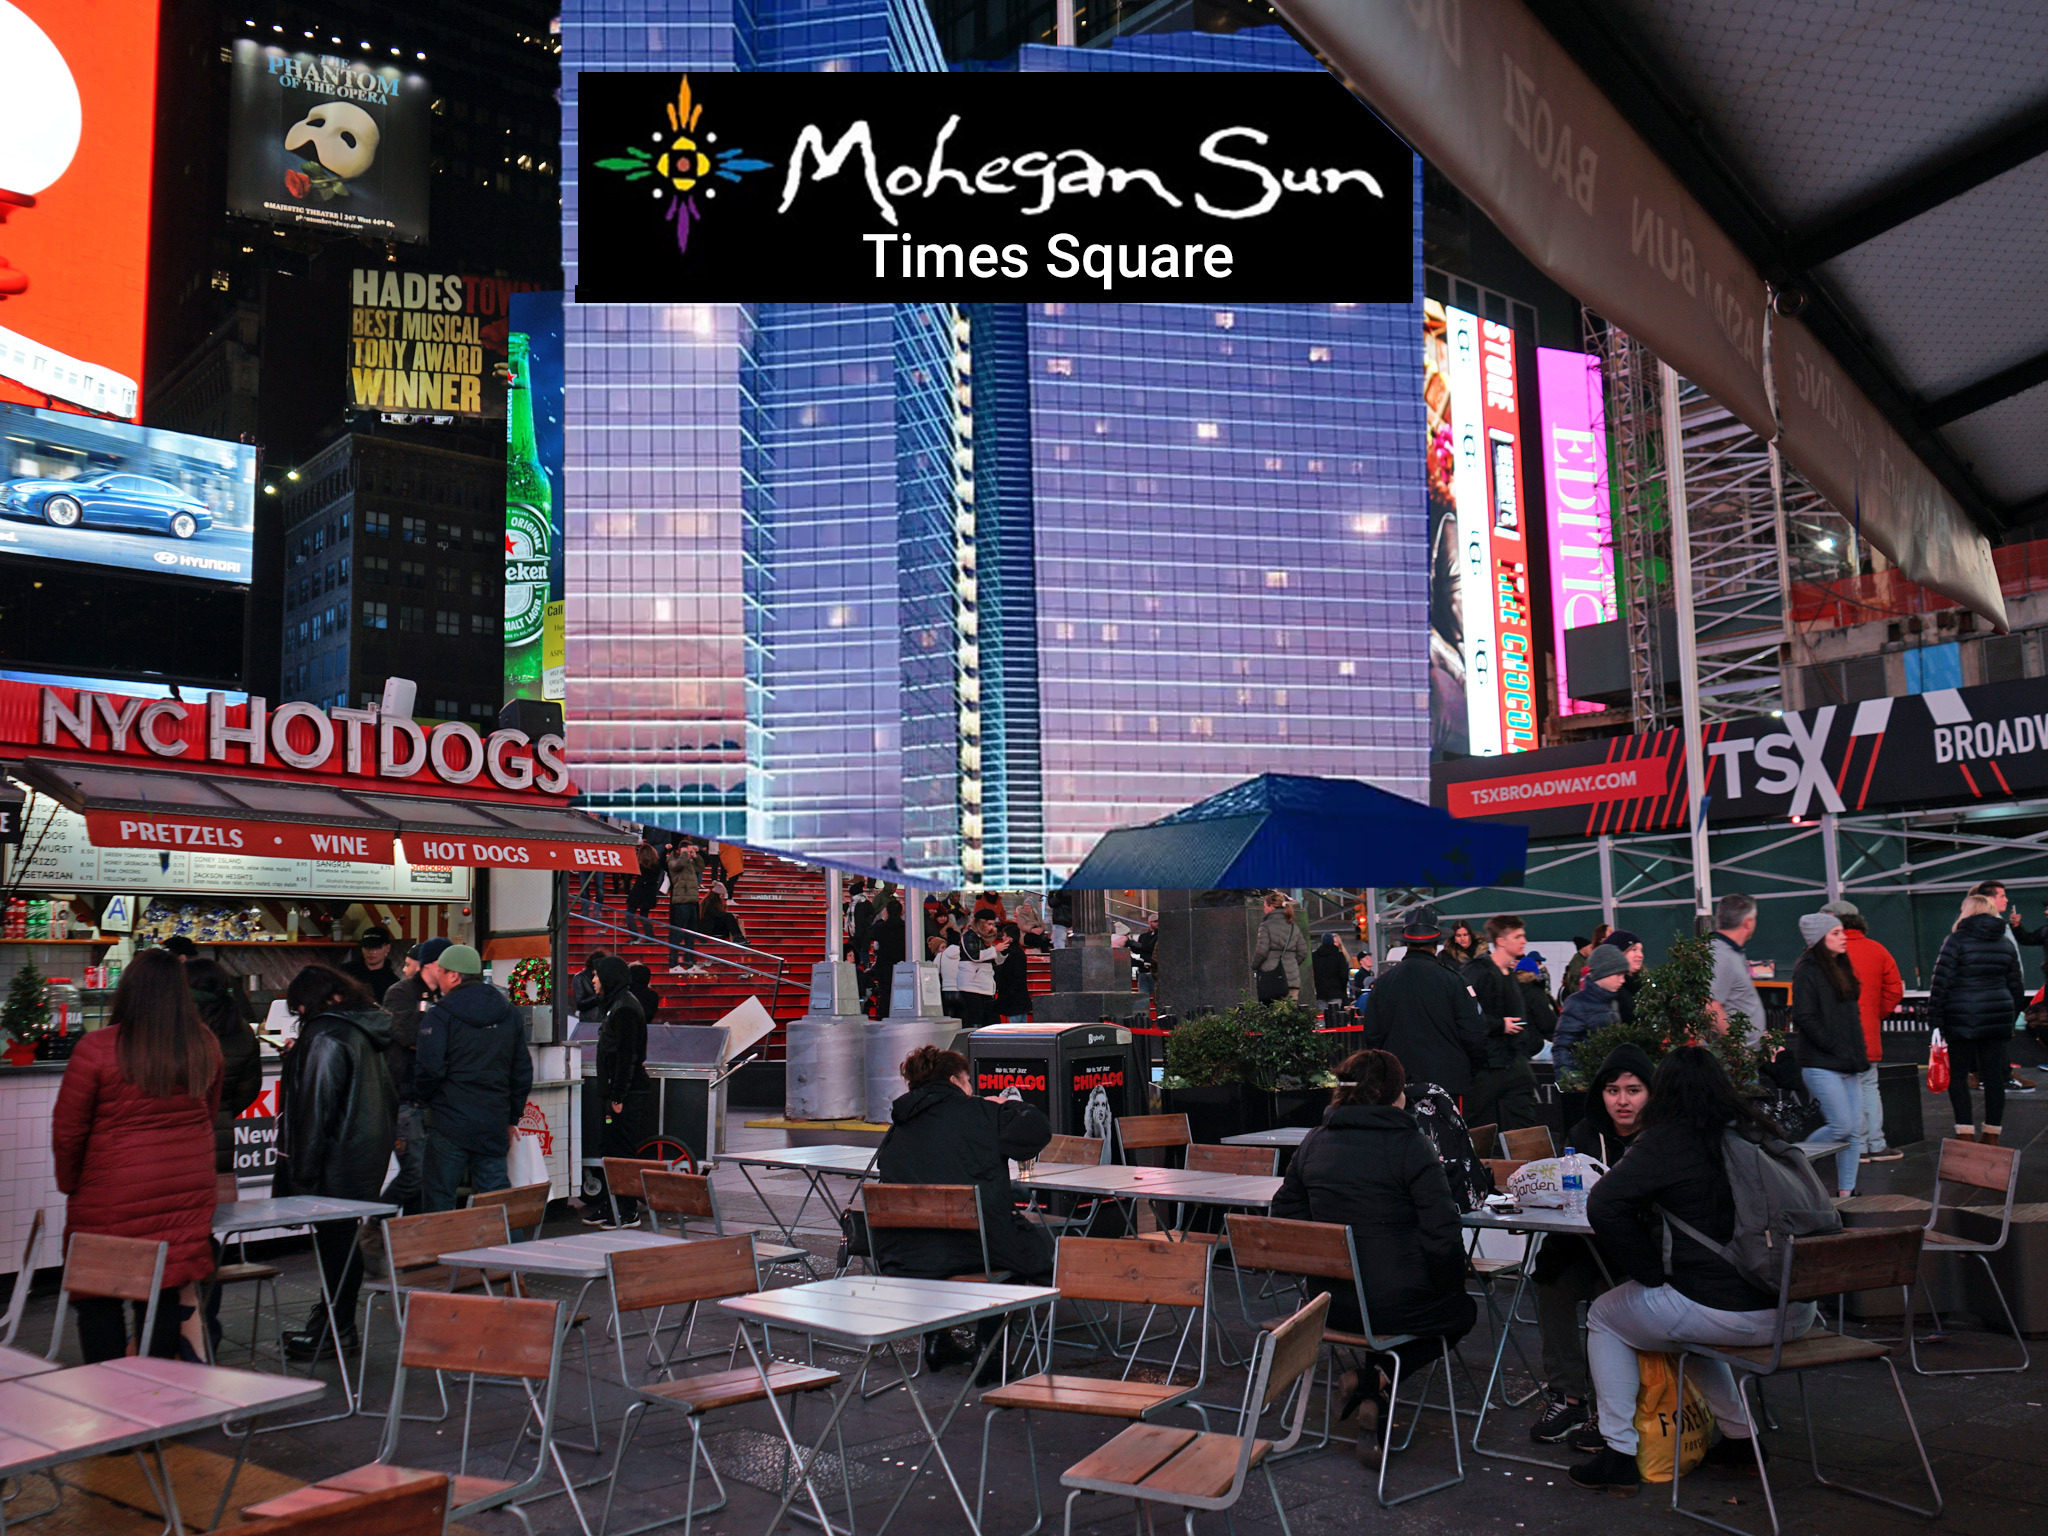 Mohegan Sun Times Square